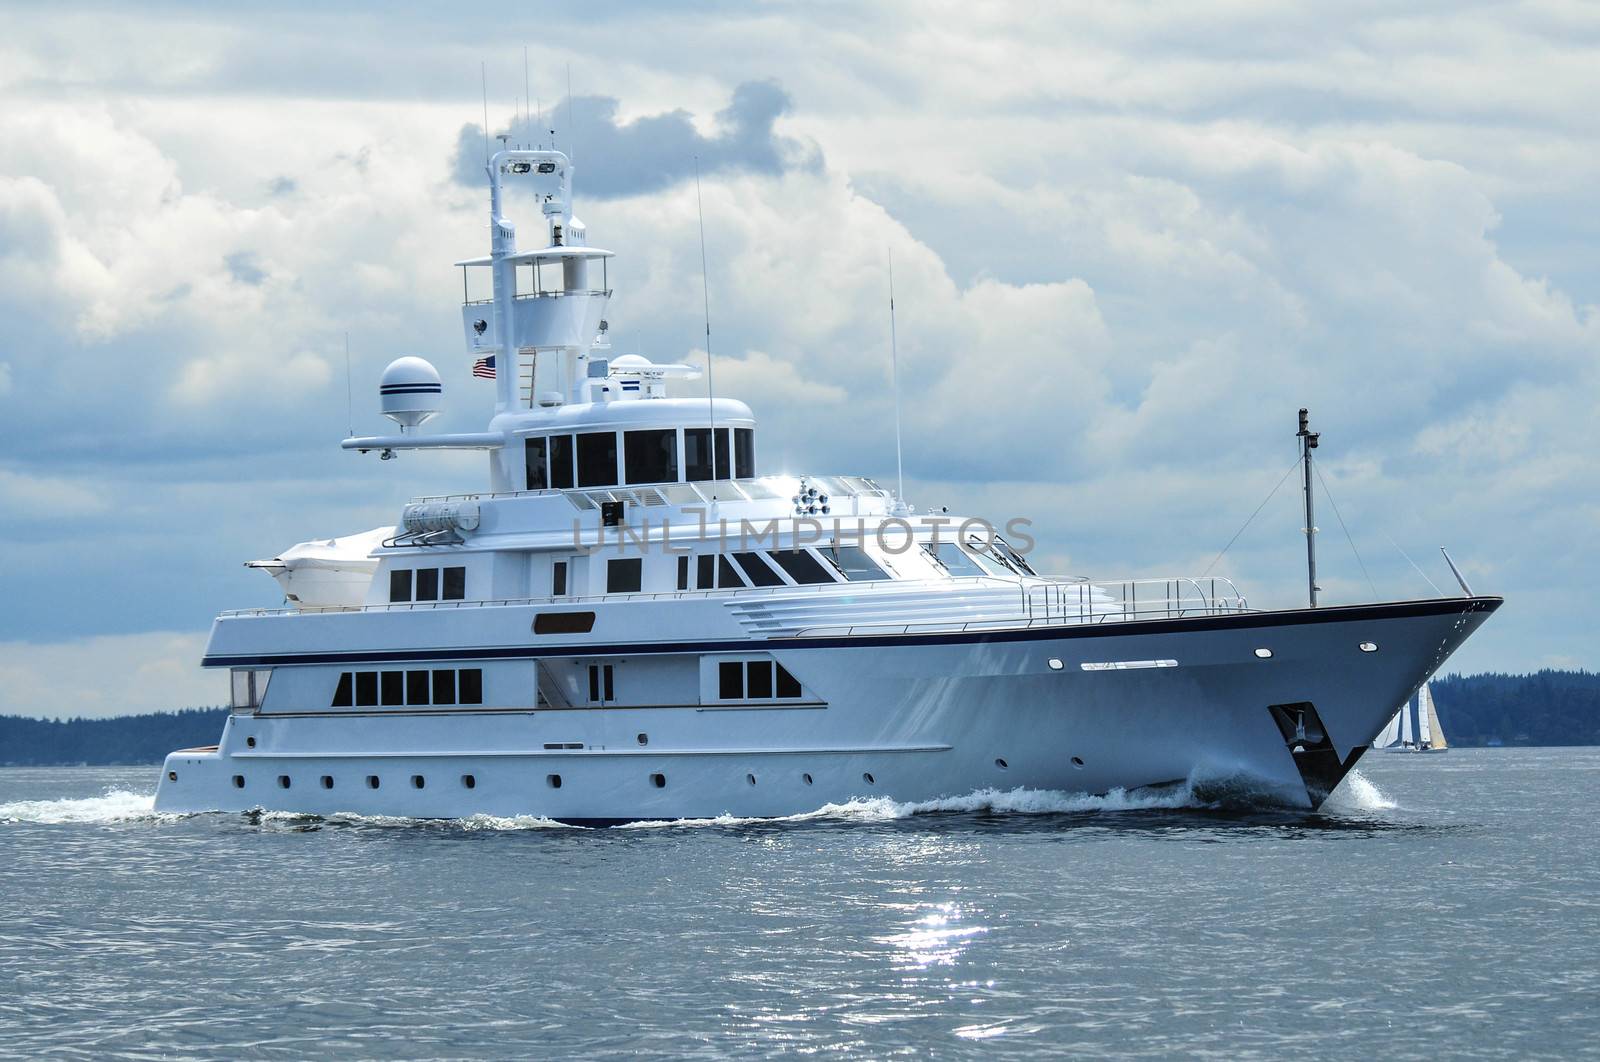 Motor Yacht departing Shilshole Bay, Seattle, WA by cestes001